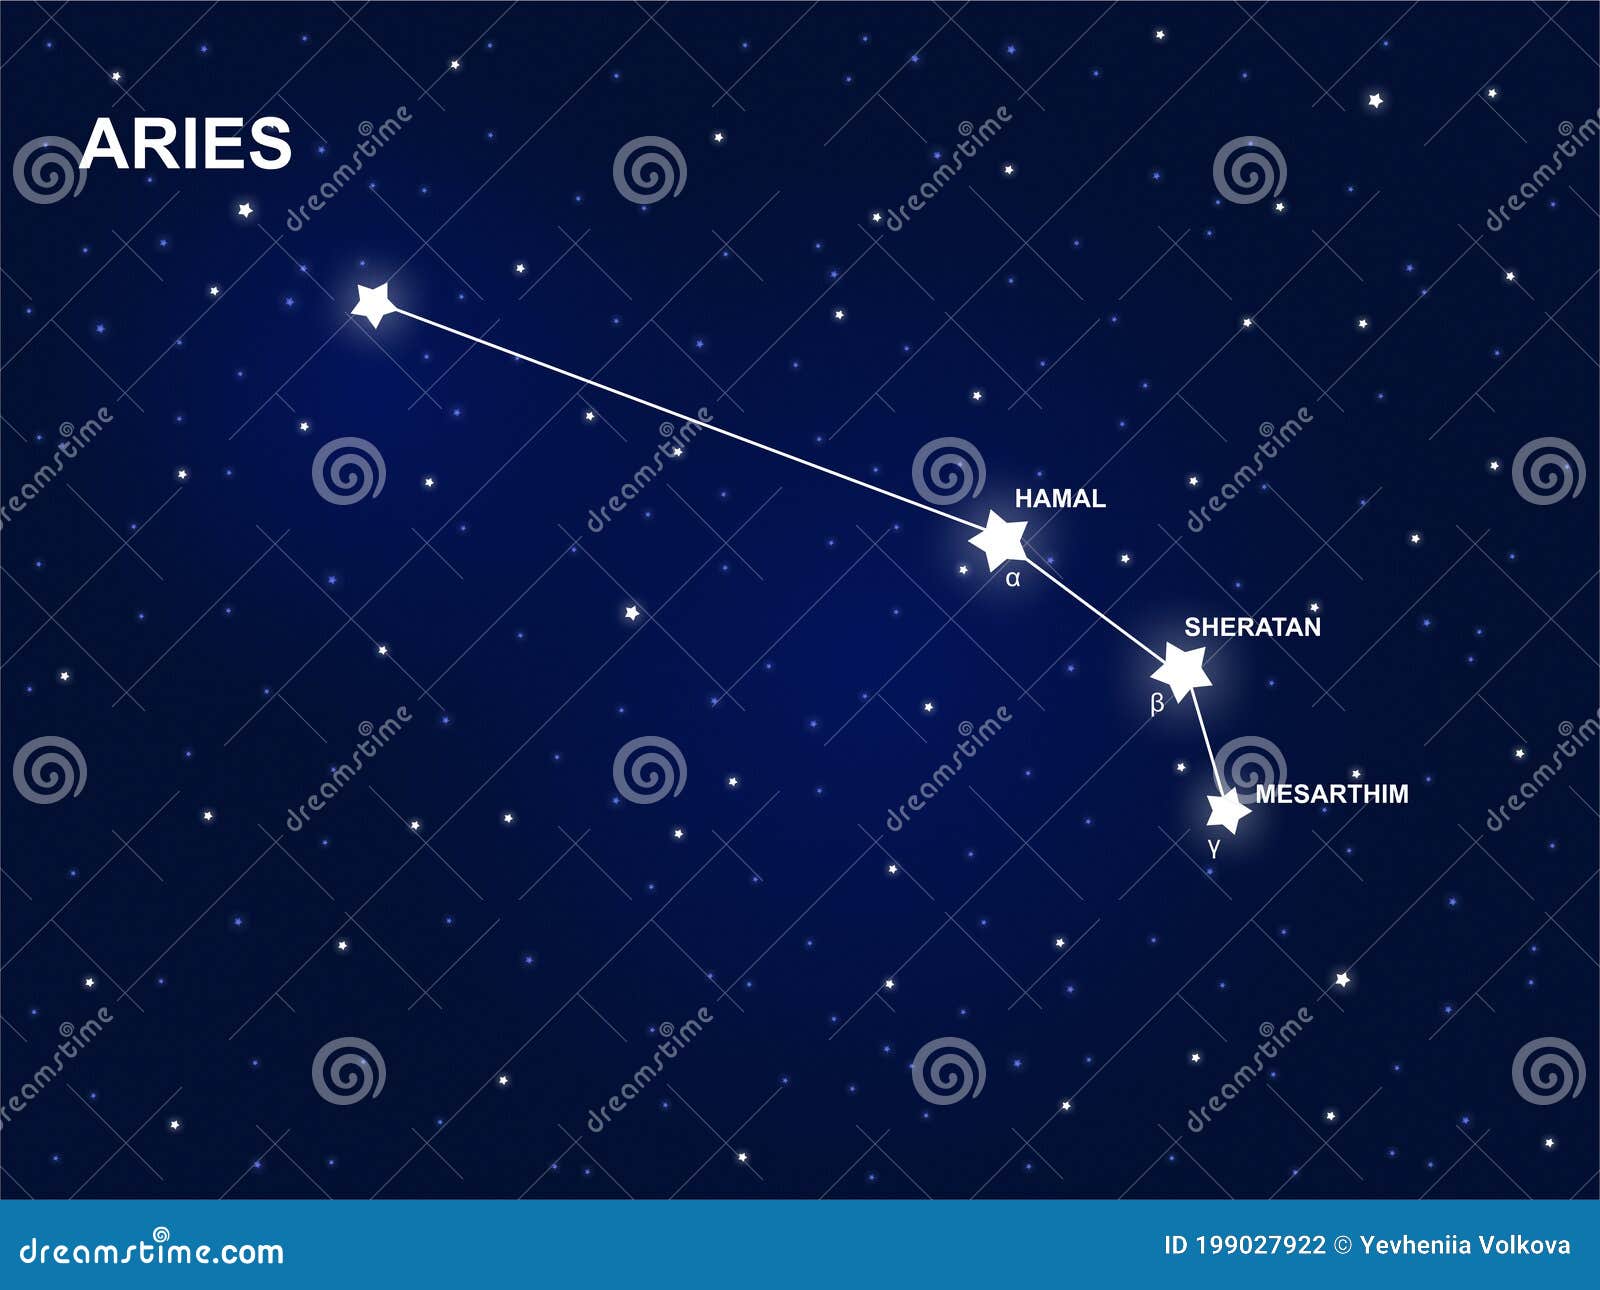 Aries Star Constellation Map